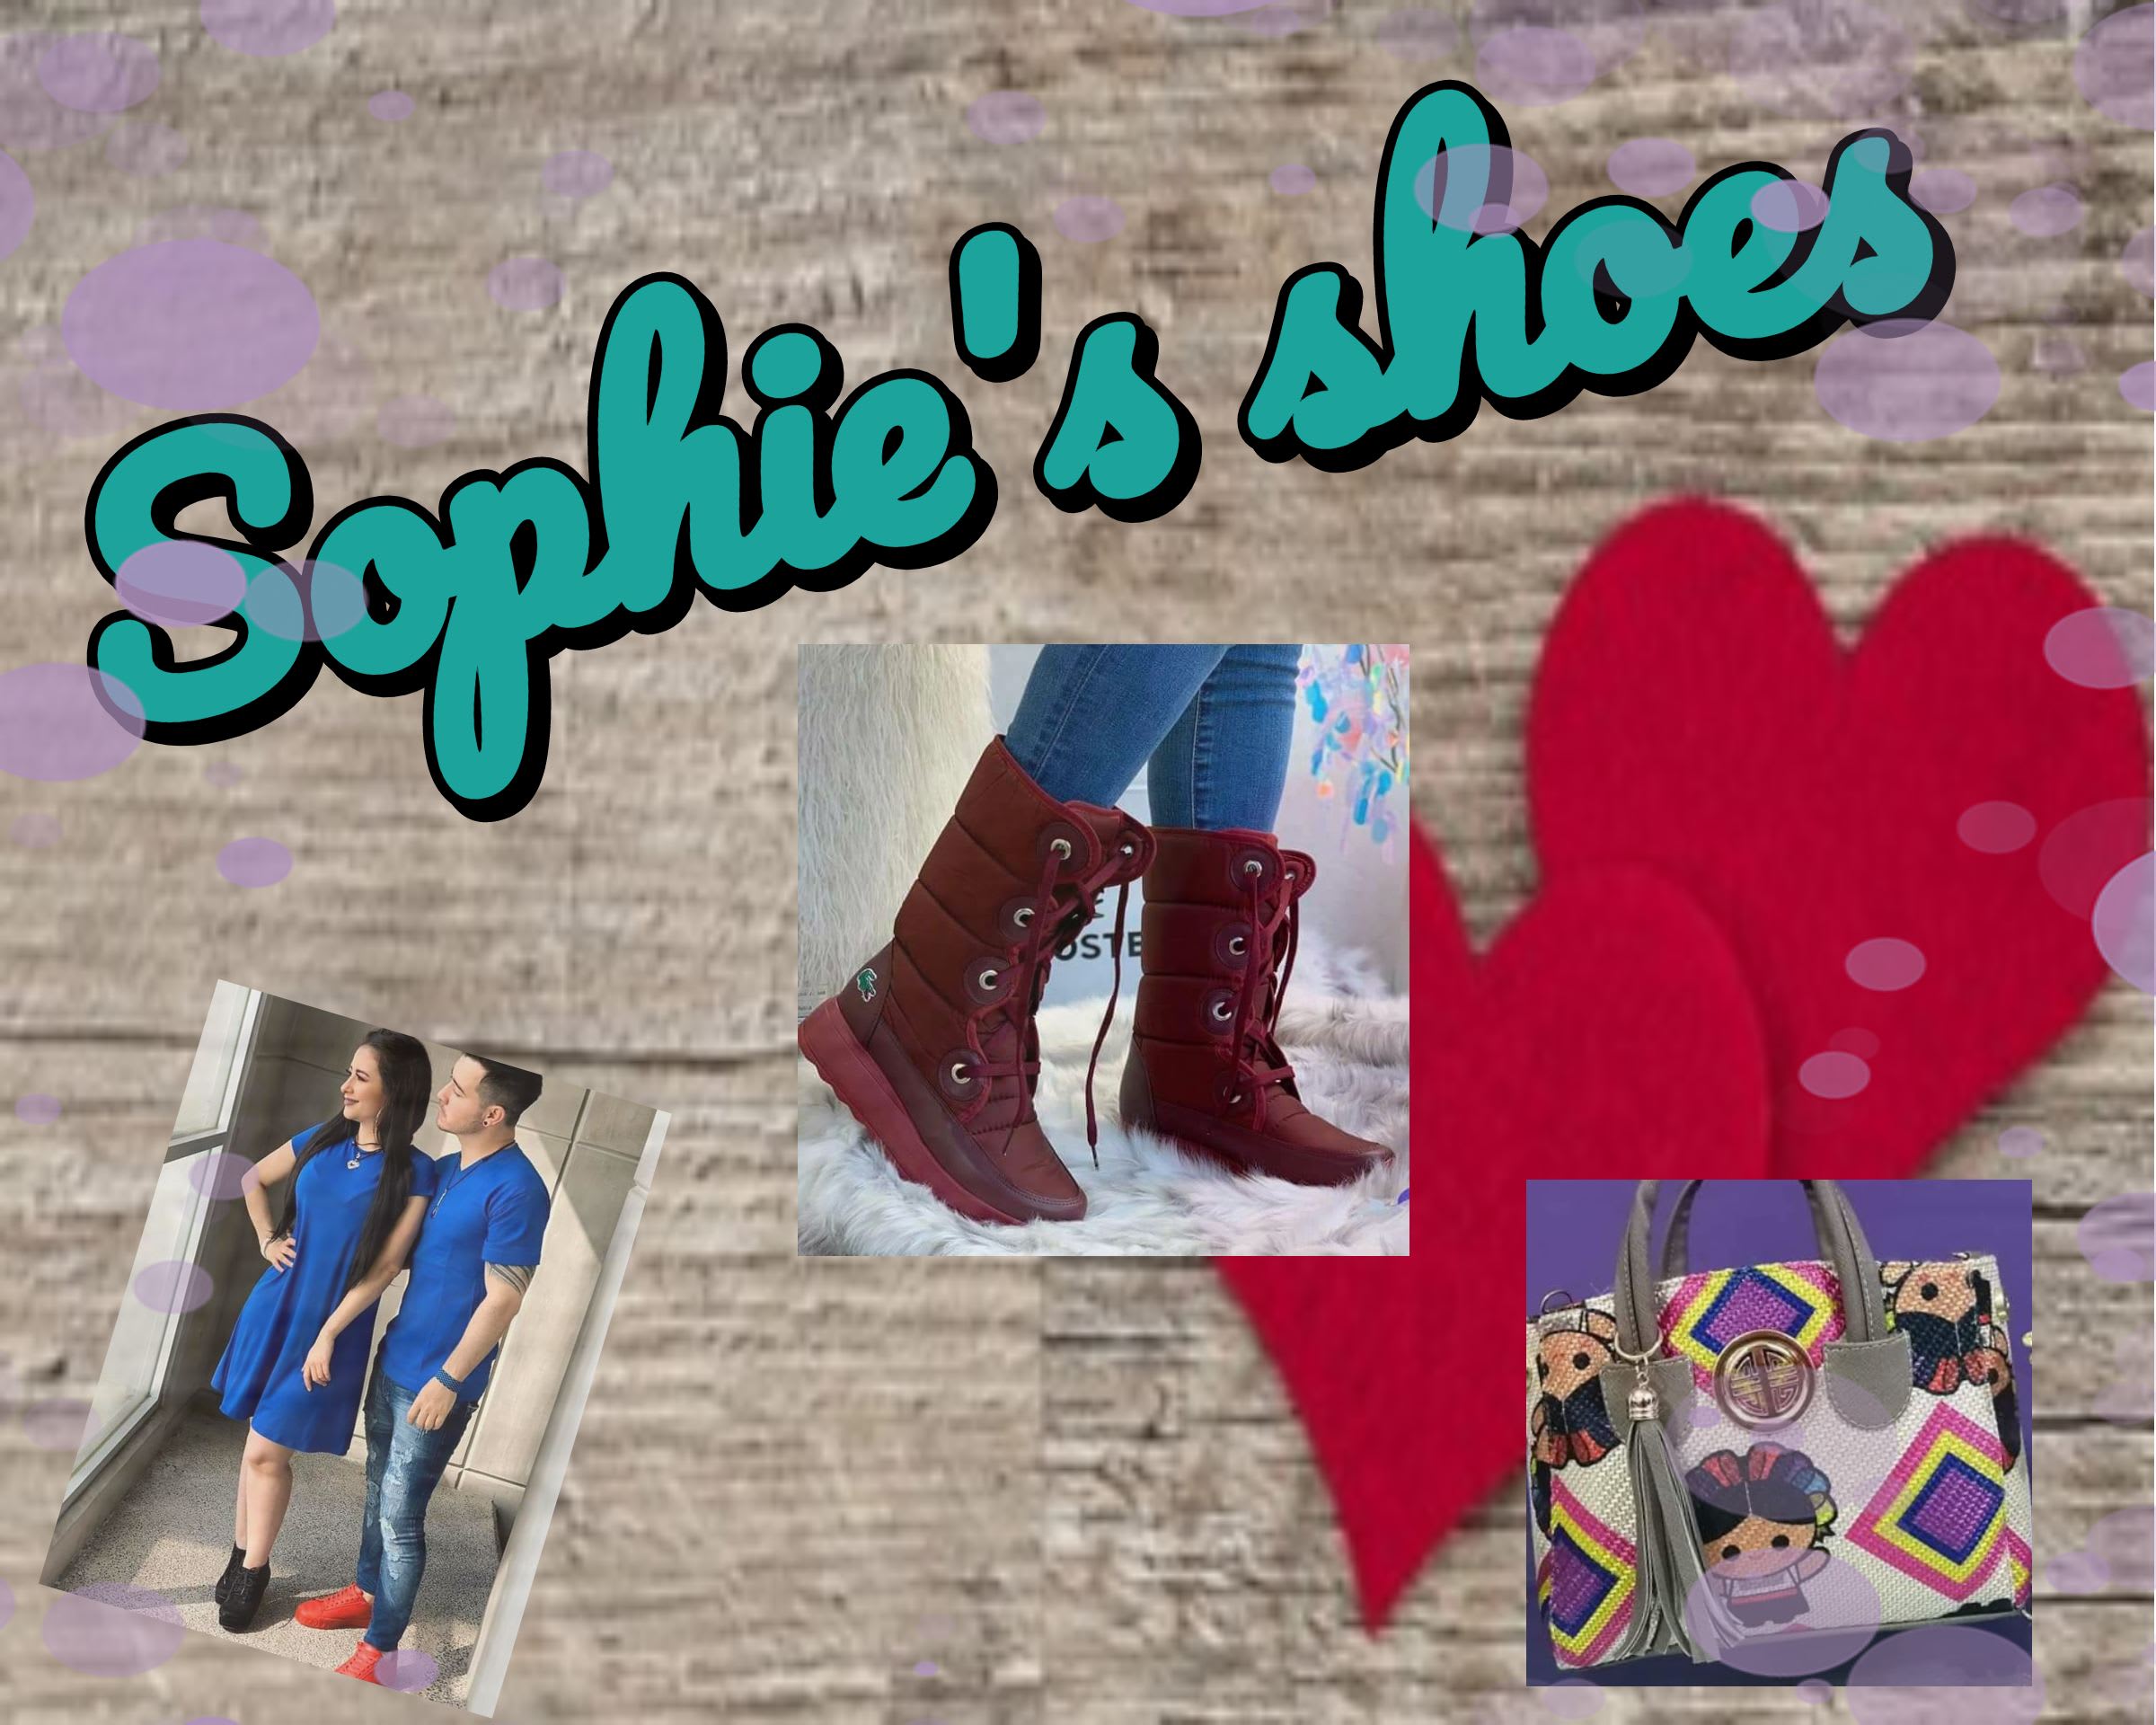 Sophie's Shoes